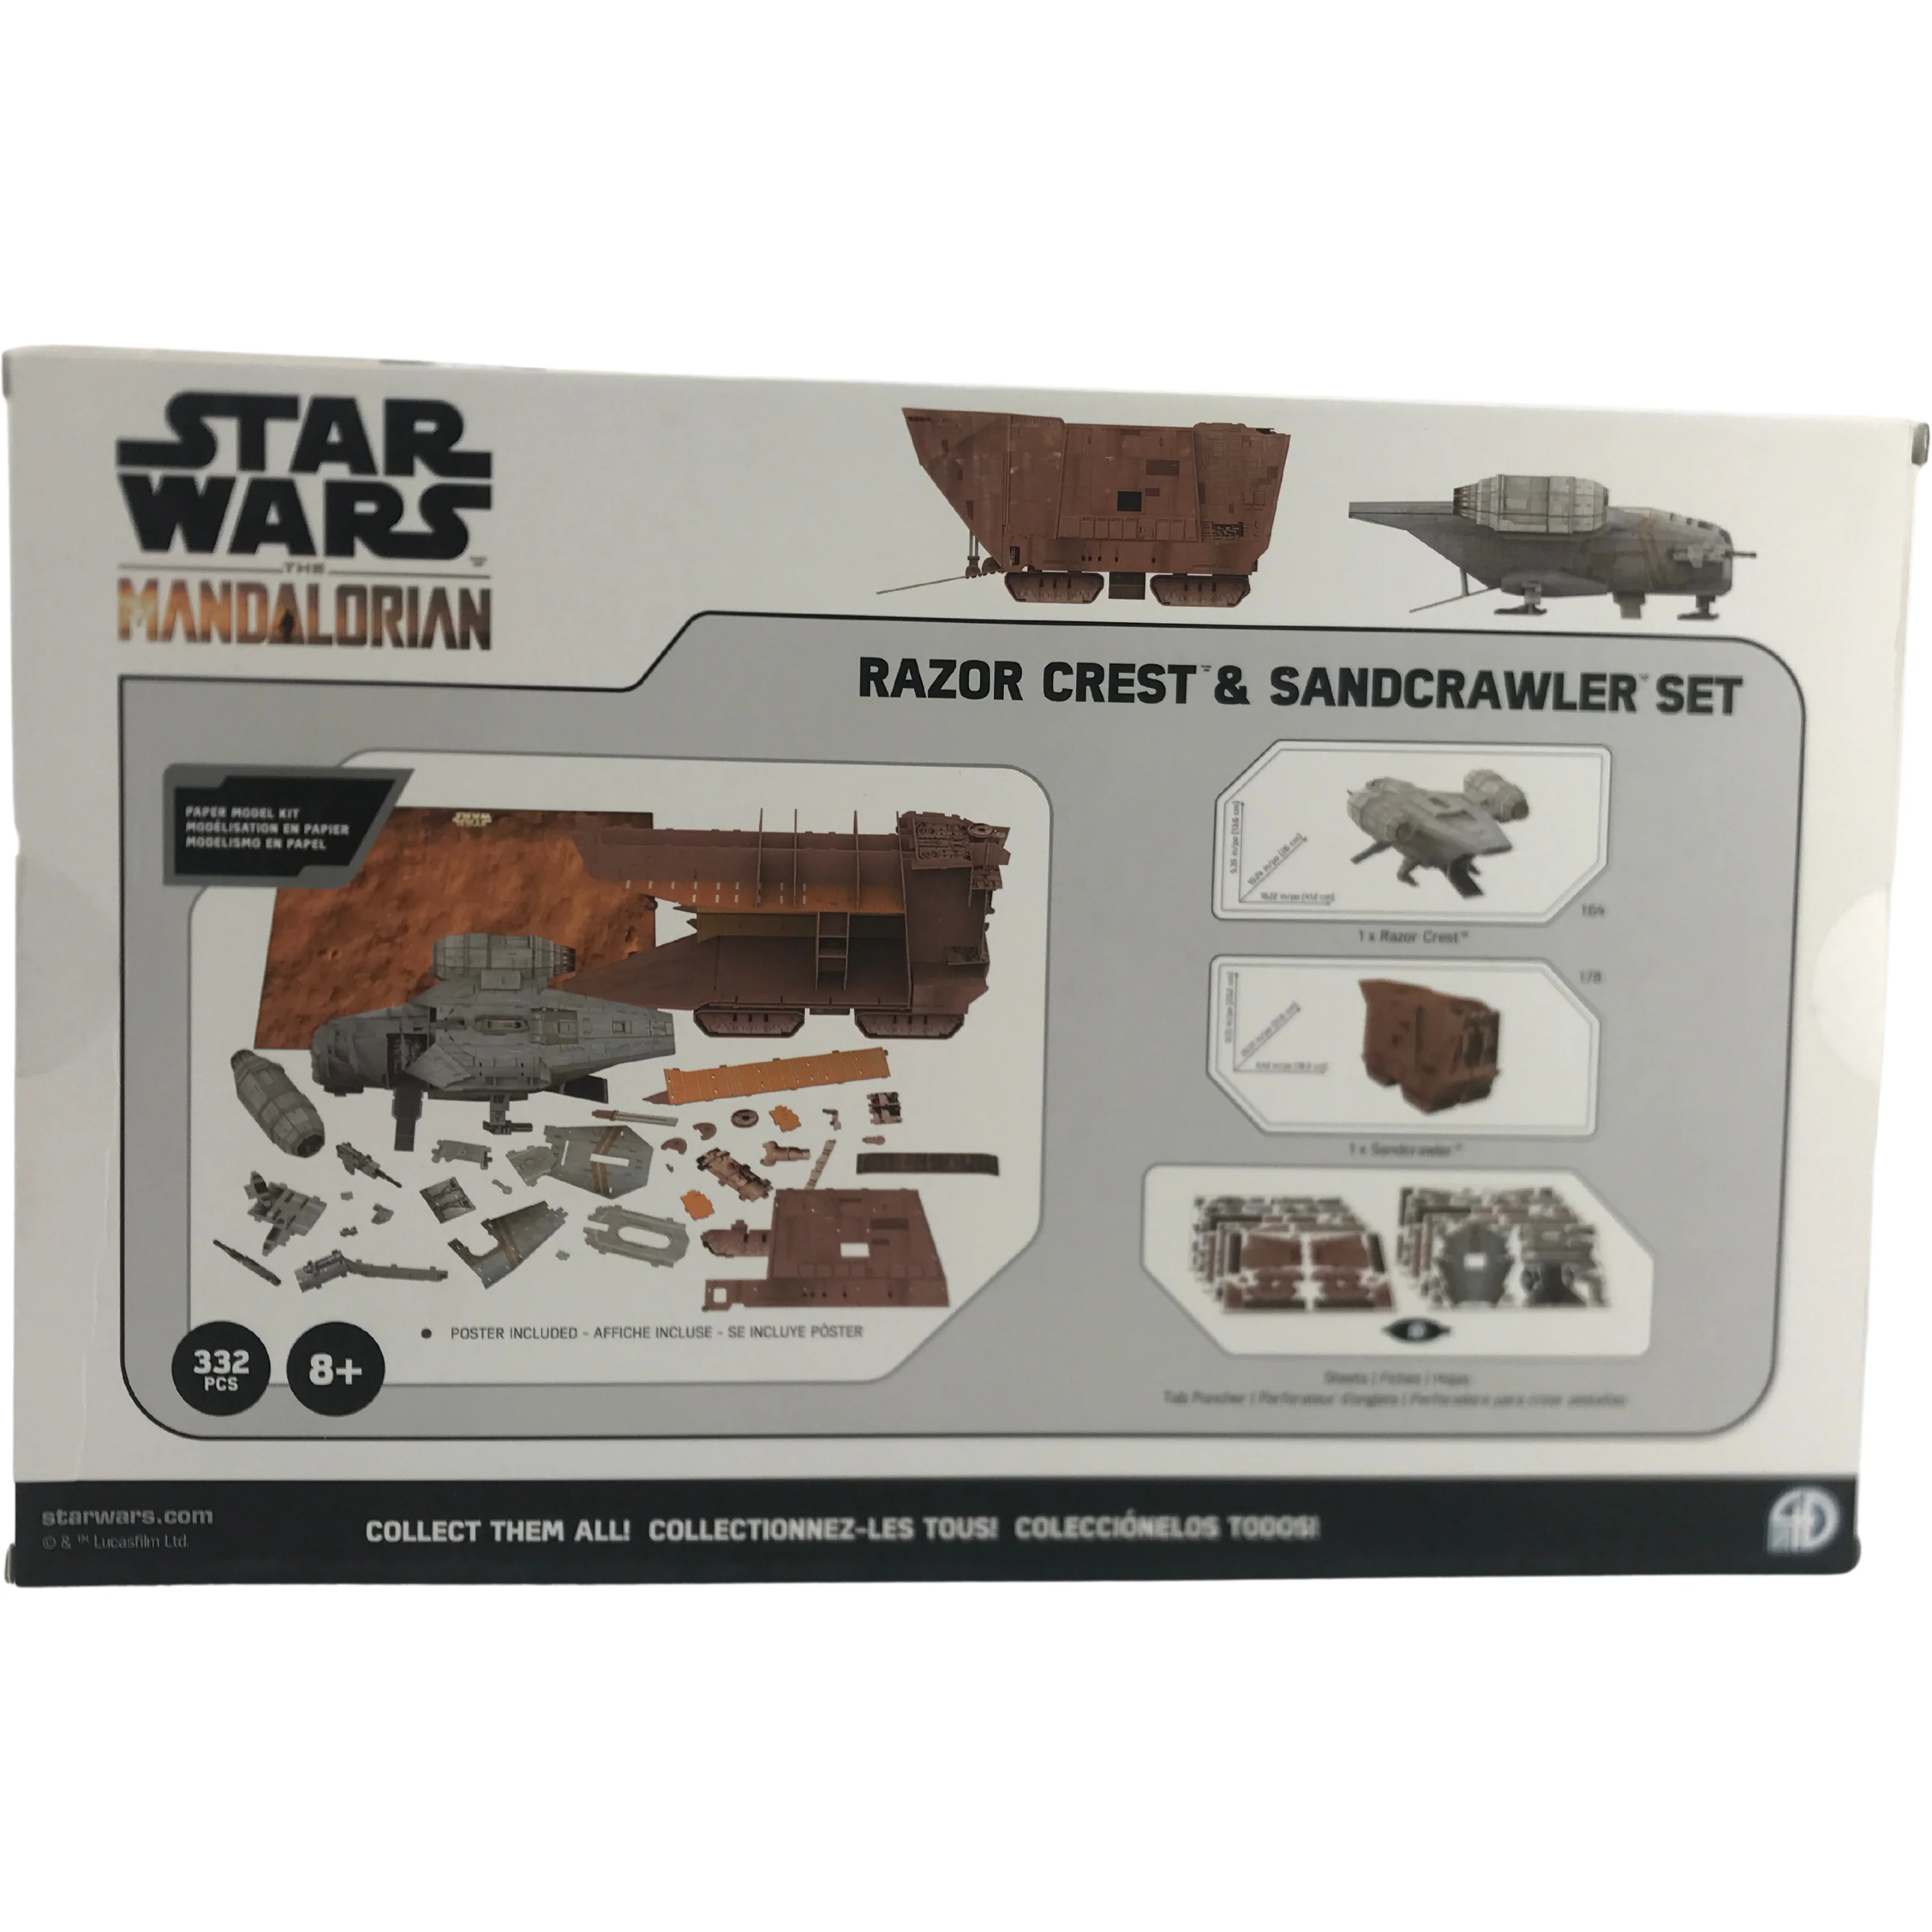 Star Wars Razor Crest & Sandcrawler Building Set: The Mandalorian / 332 Pieces **DEALS**